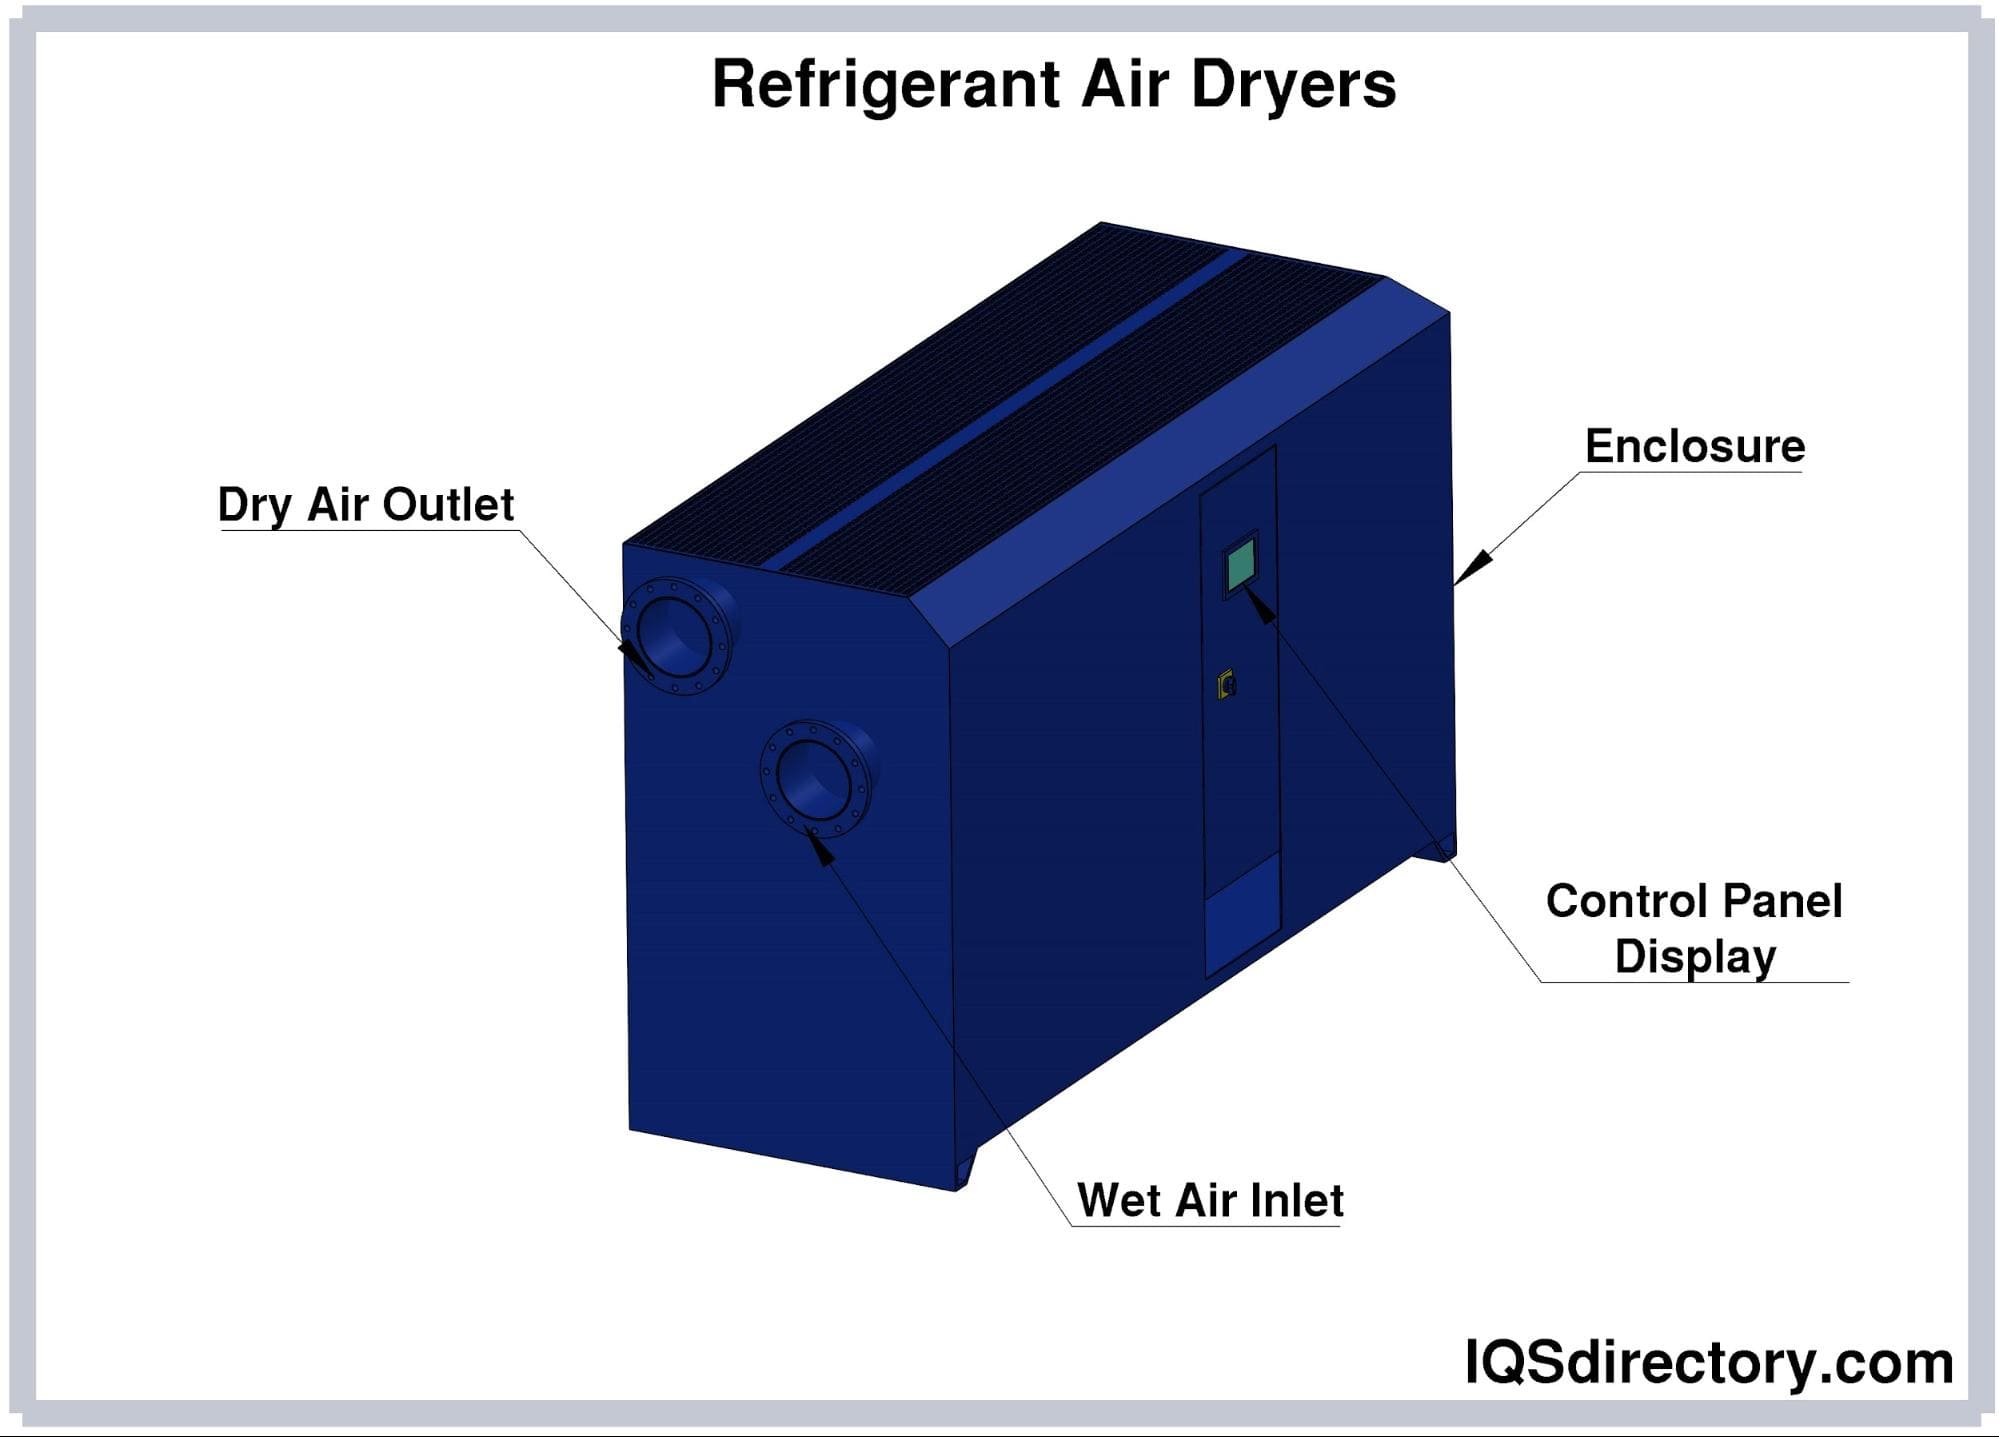 Refrigerant Air Dryers